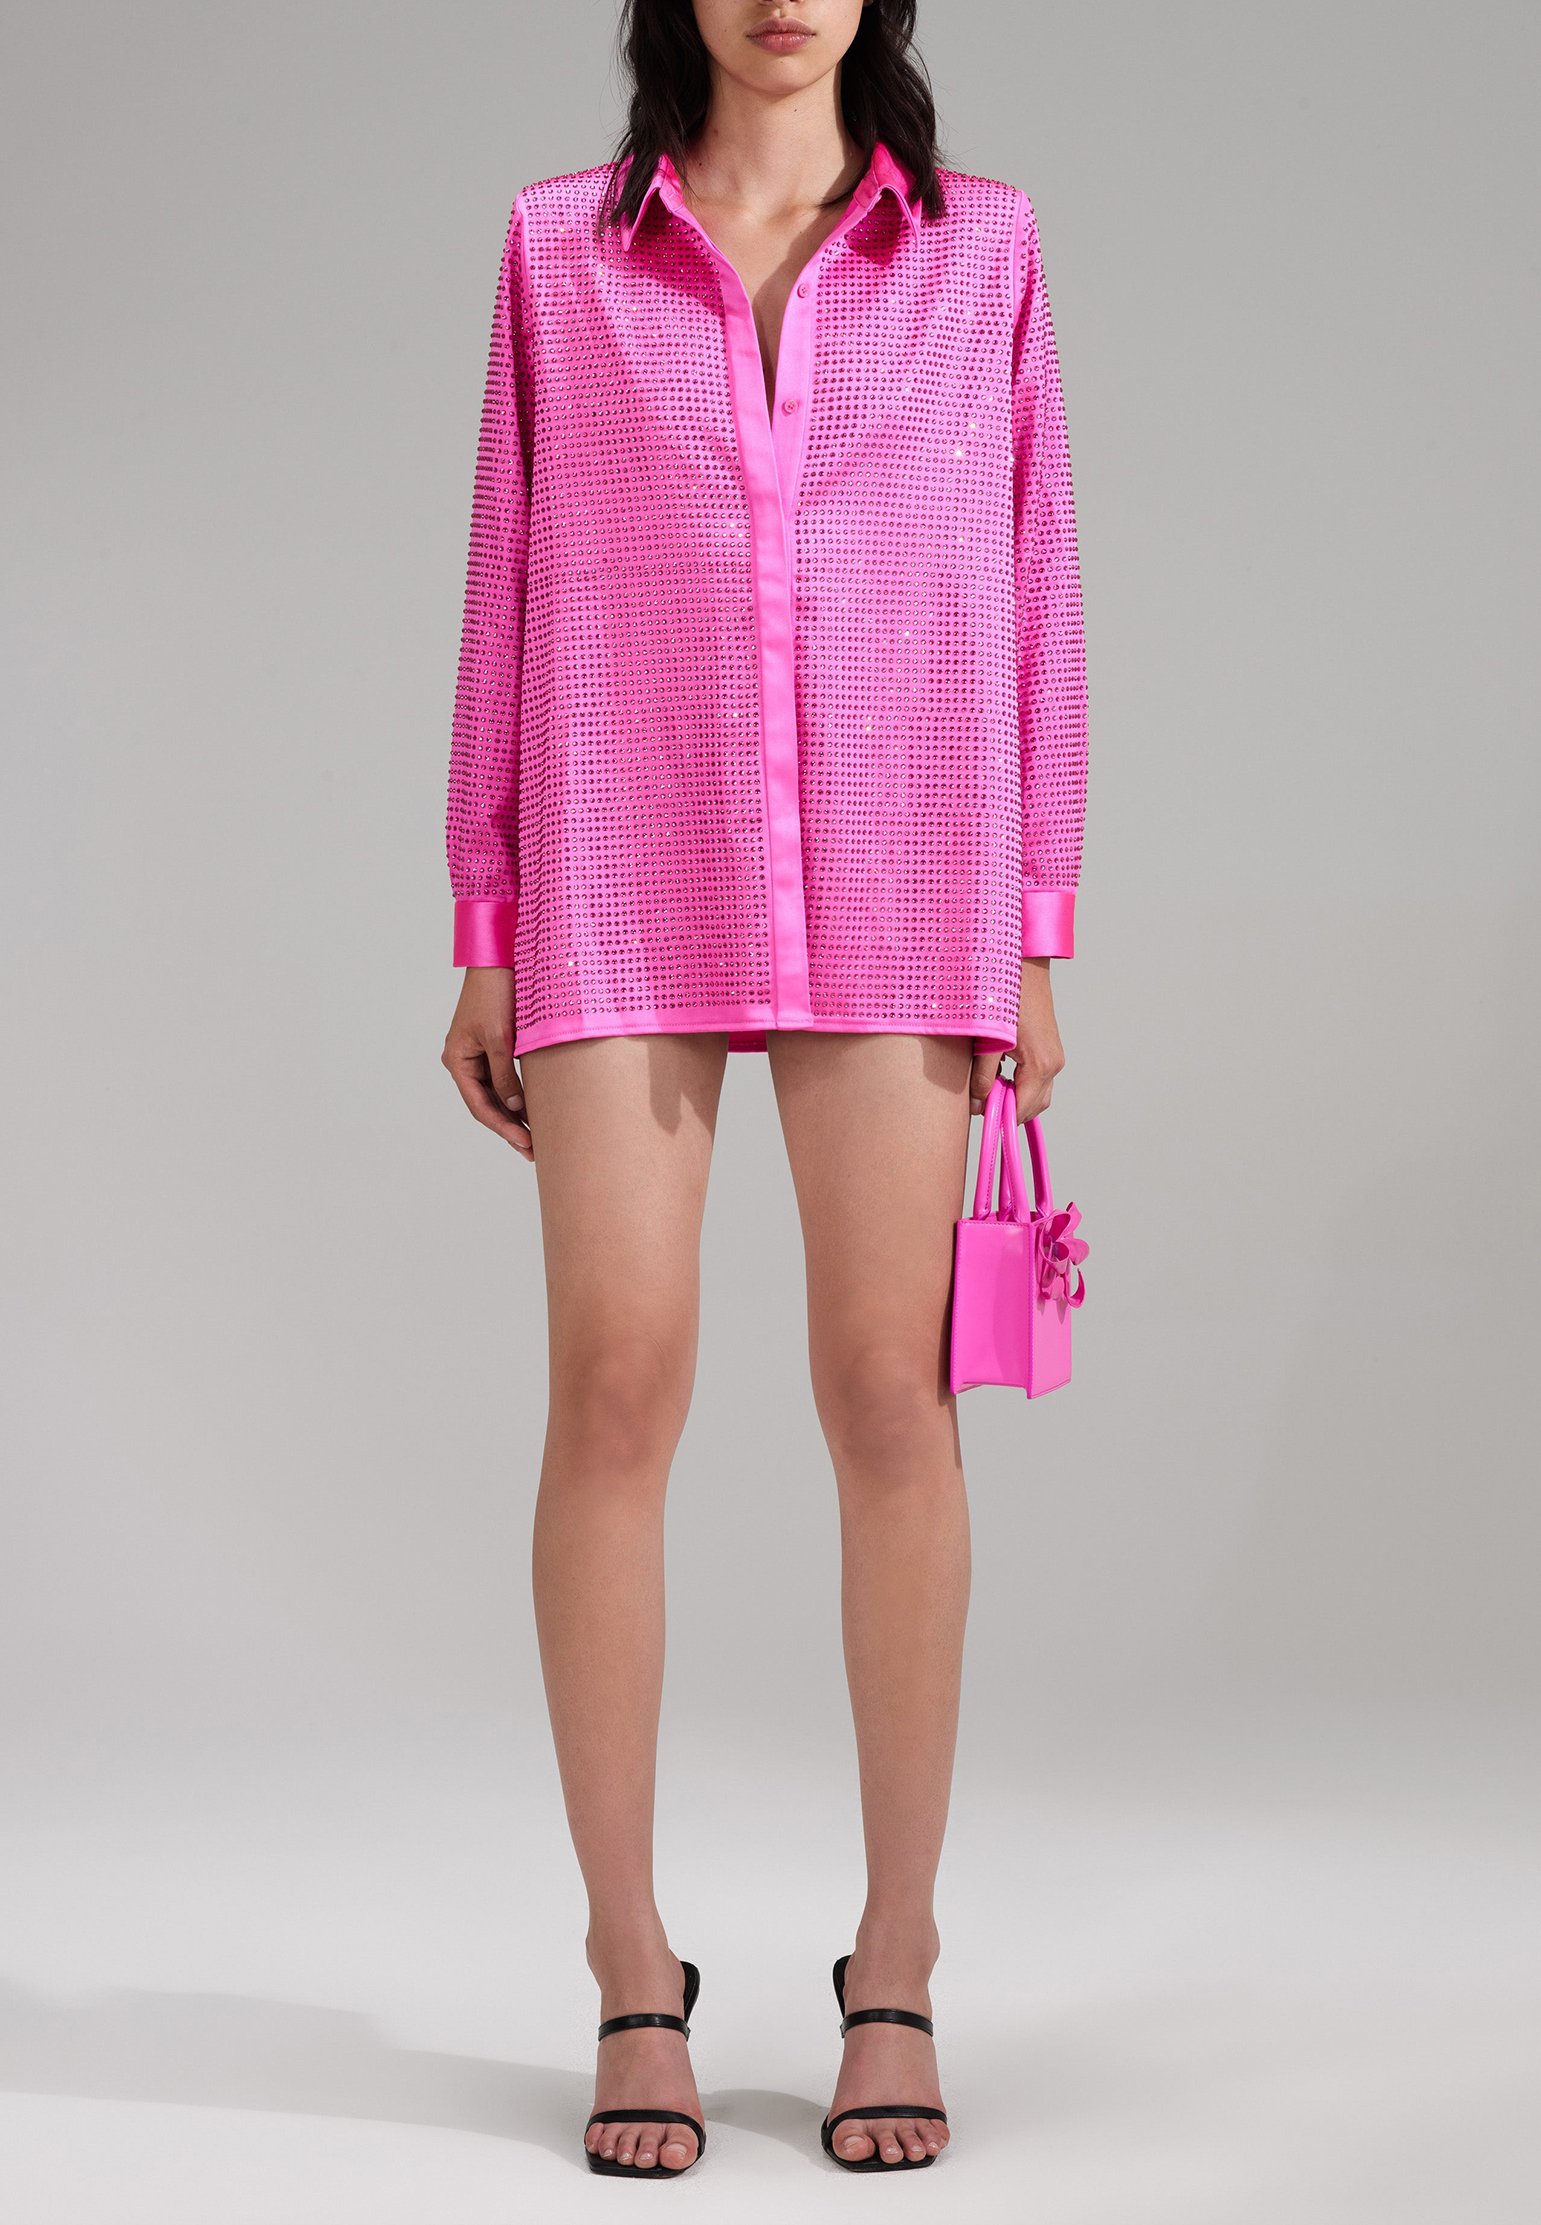 Shirt SELF-PORTRAIT Color: pink (Code: 1773) in online store Allure